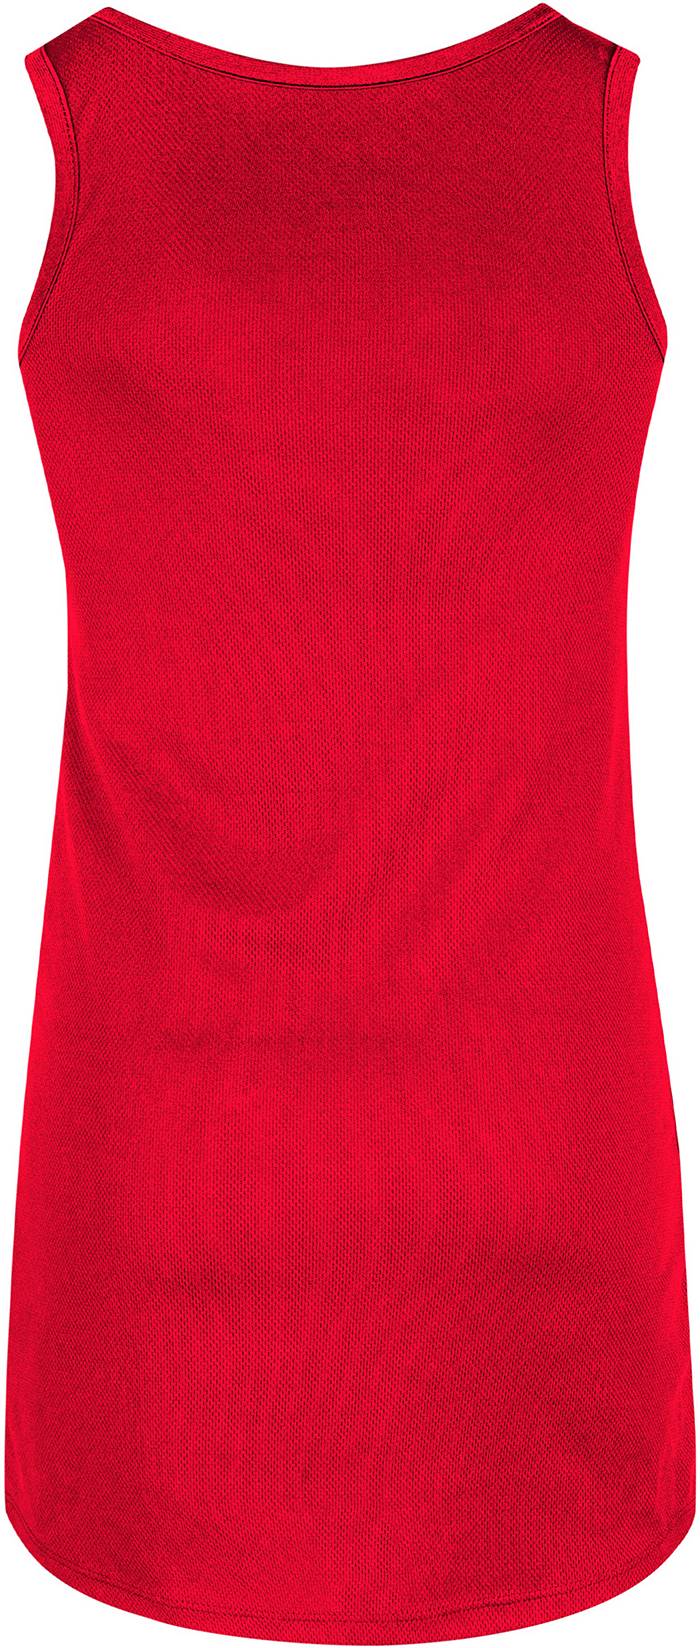 Jordan Little Girls' Jersey Dress, Size 6, Gym Red